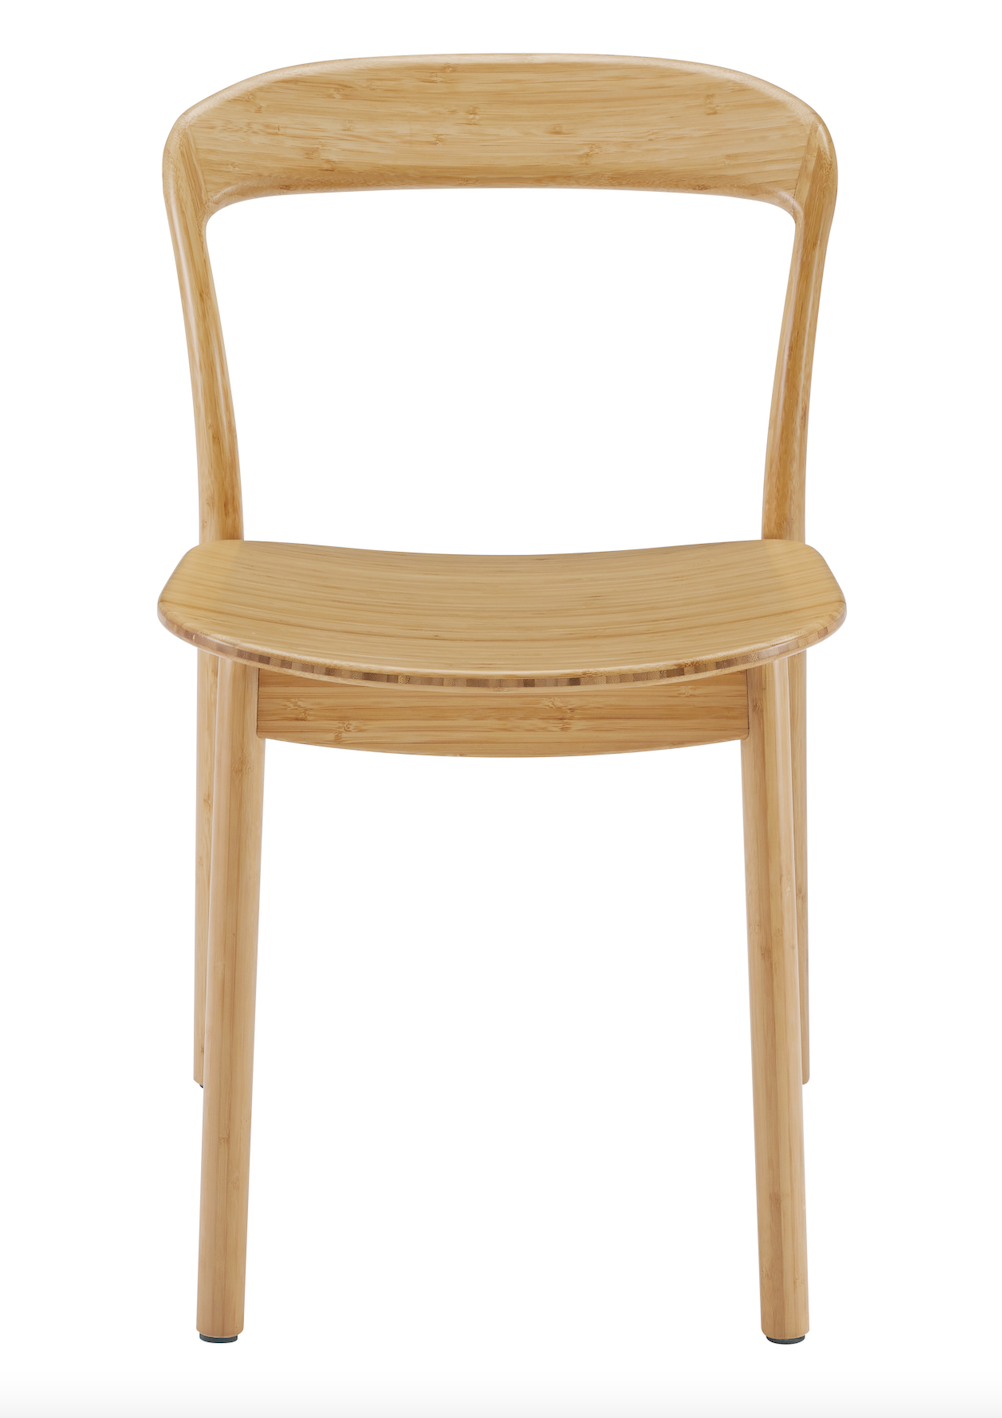 Greenington Hanna Modern Chair Bamboo Dining Chair, Wheat (Set of 2)